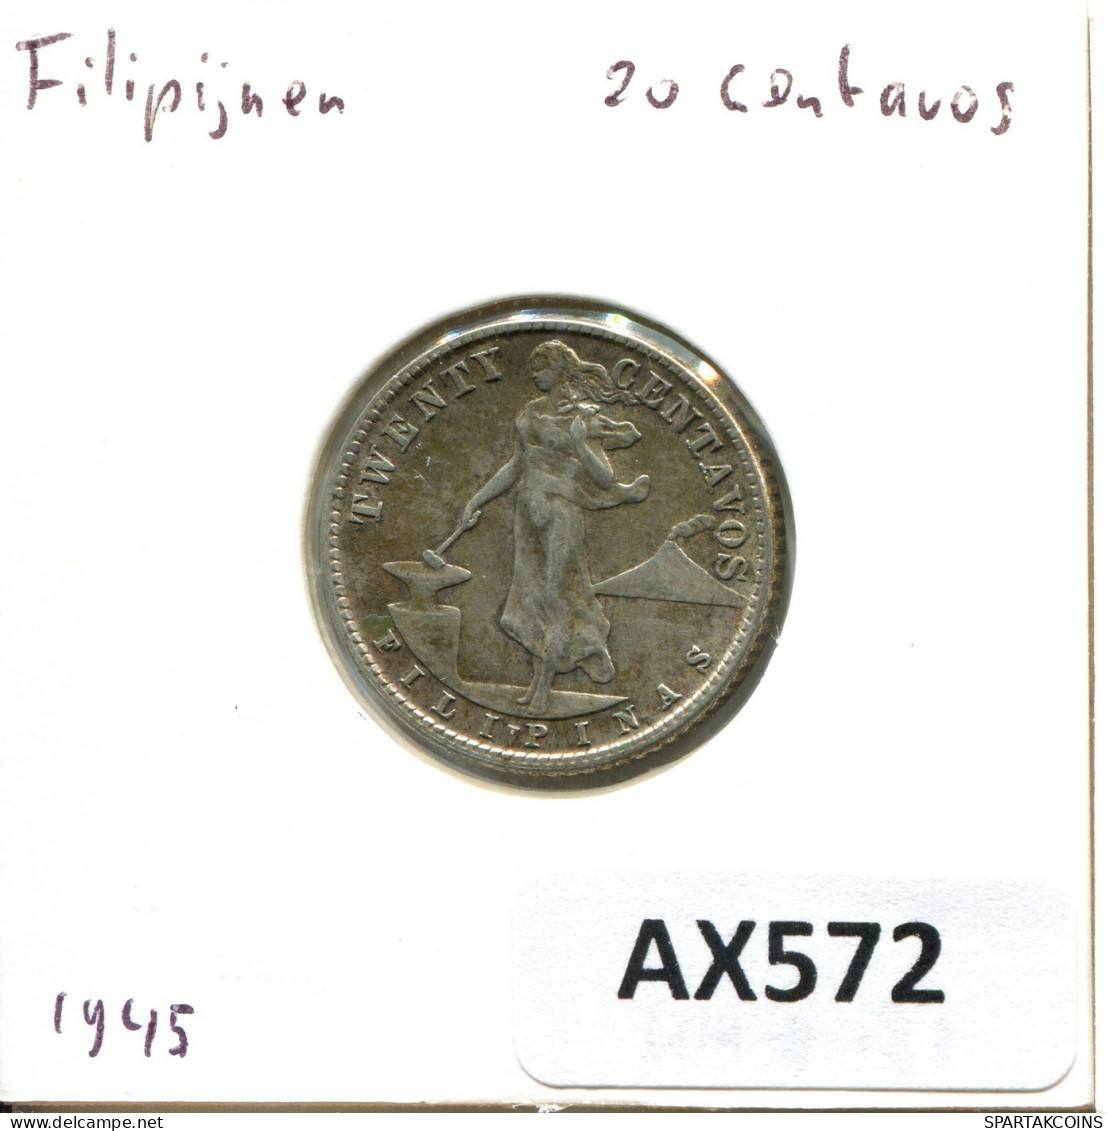 20 CENTAVOS 1945 PHILIPPINES ARGENT Pièce #AX572.F.A - Philippines